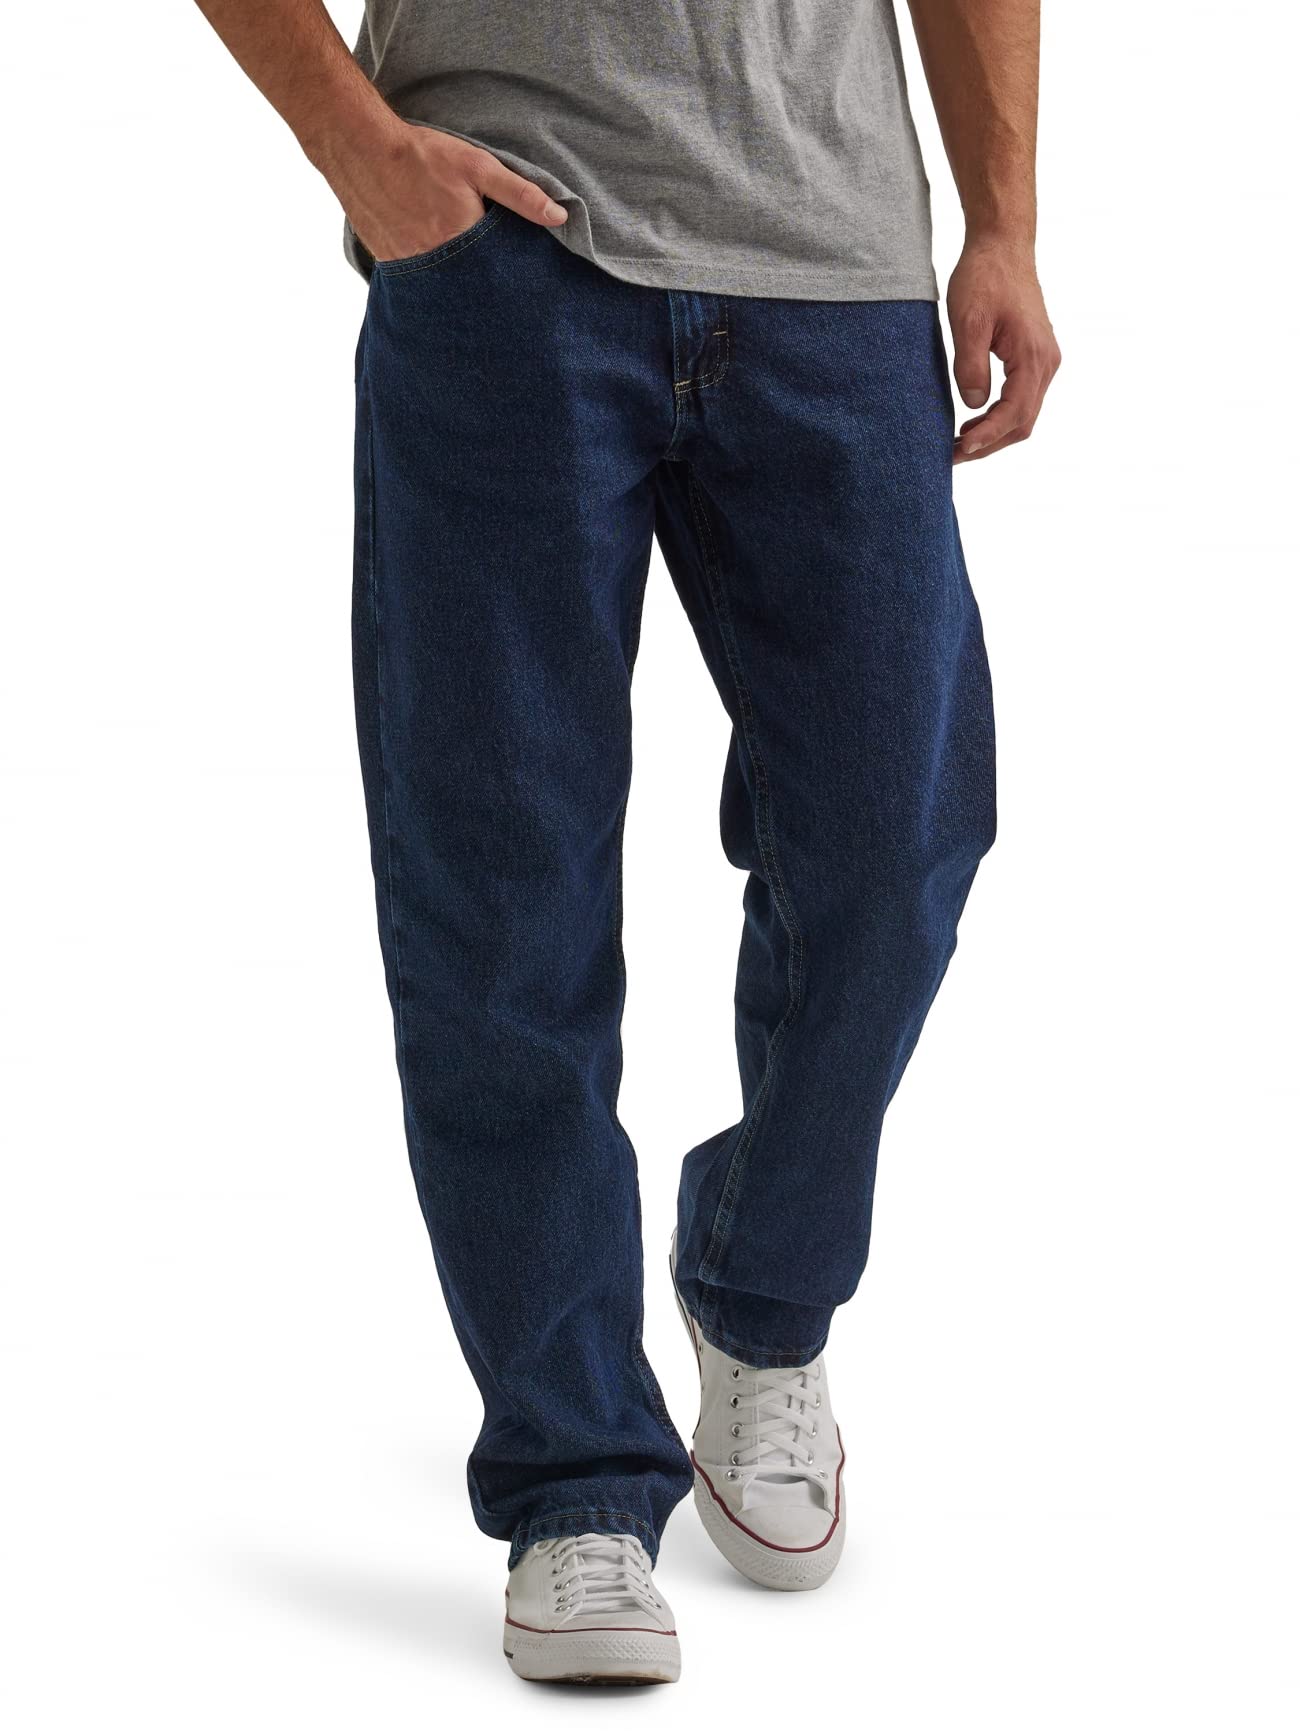 Wrangler Authentics Men's Big & Tall Classic 5-Pocket Relaxed Fit Cotton Jean, Dark Rinse, 46W X 32L